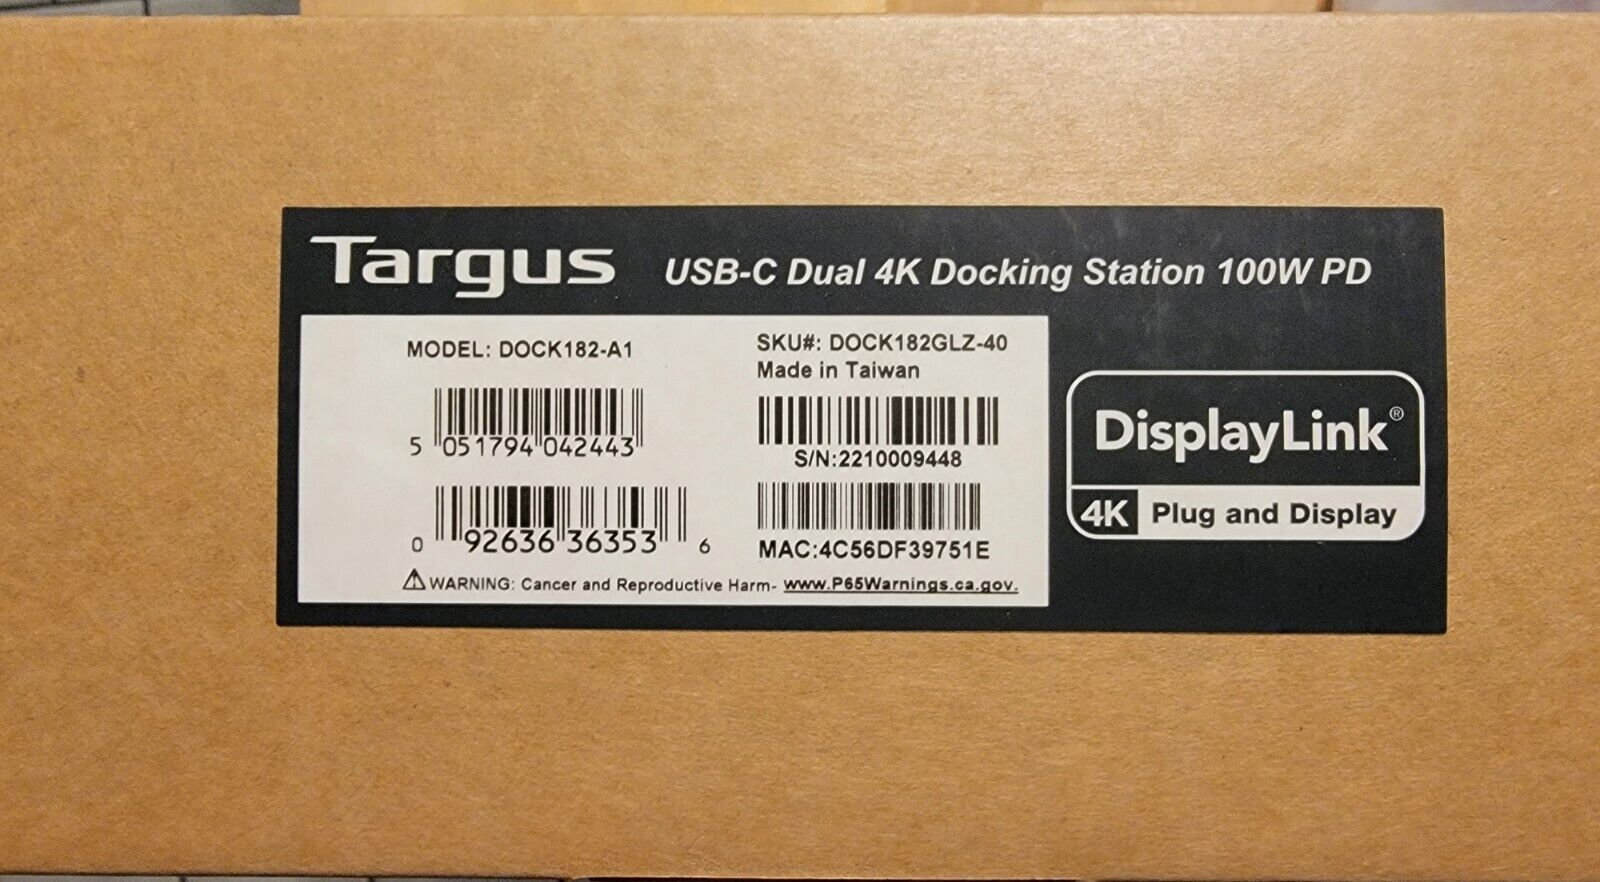 Targus USB-C Universal DV4K Docking Station with 100W Power Delivery *BRAND NEW*